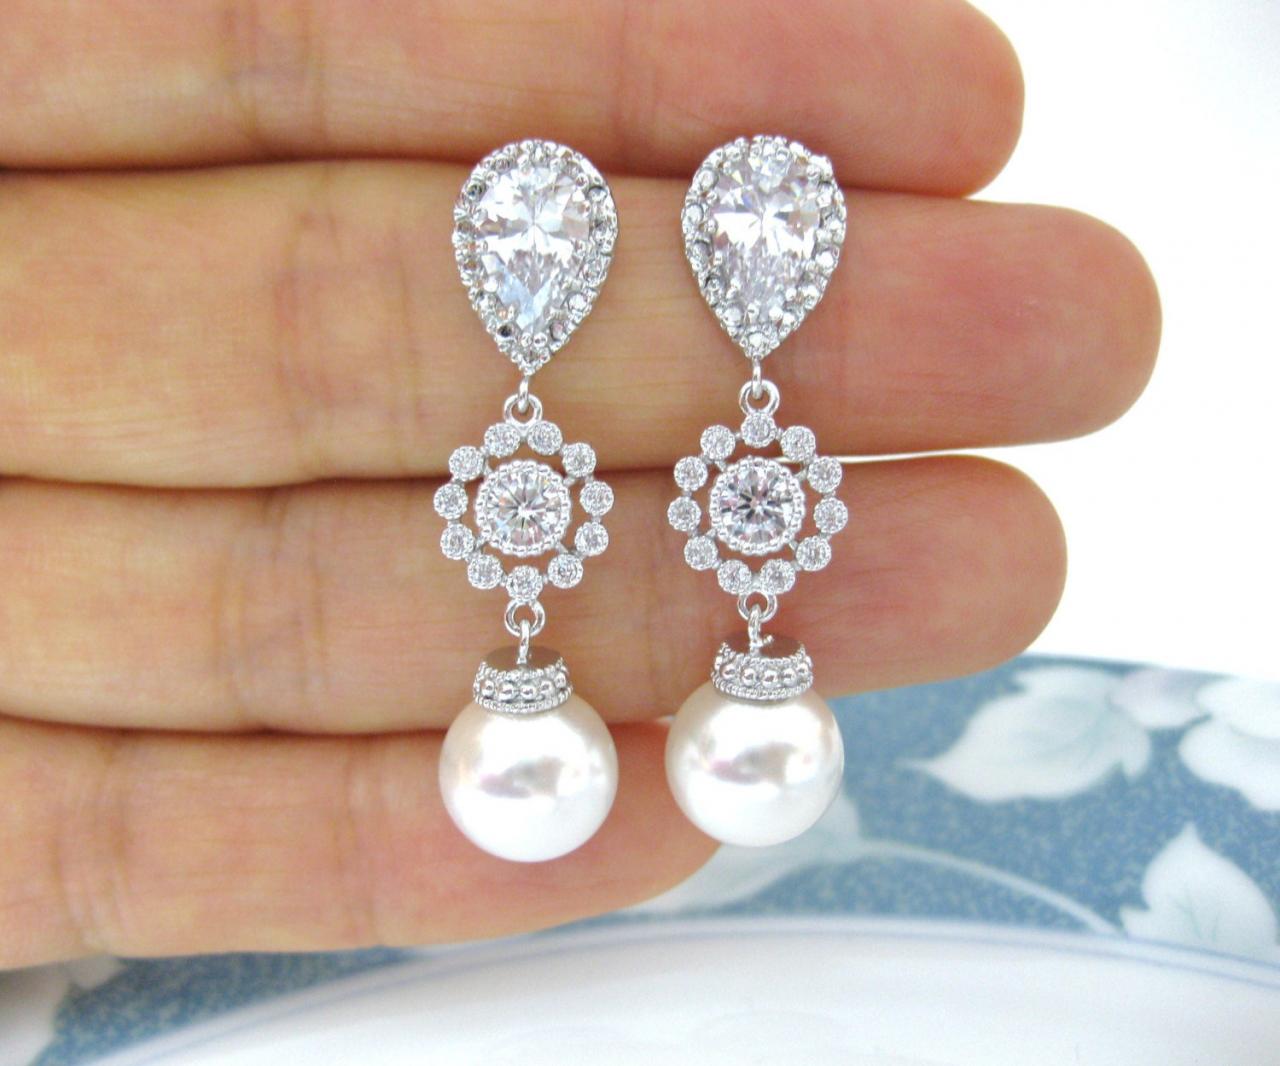 Bridal Pearl Earrings Swarovski Round 10mm Pearl Wedding Jewelry Bridesmaid Gift Cubic Zirconia Earrings Silver Floral Earrings (e113)